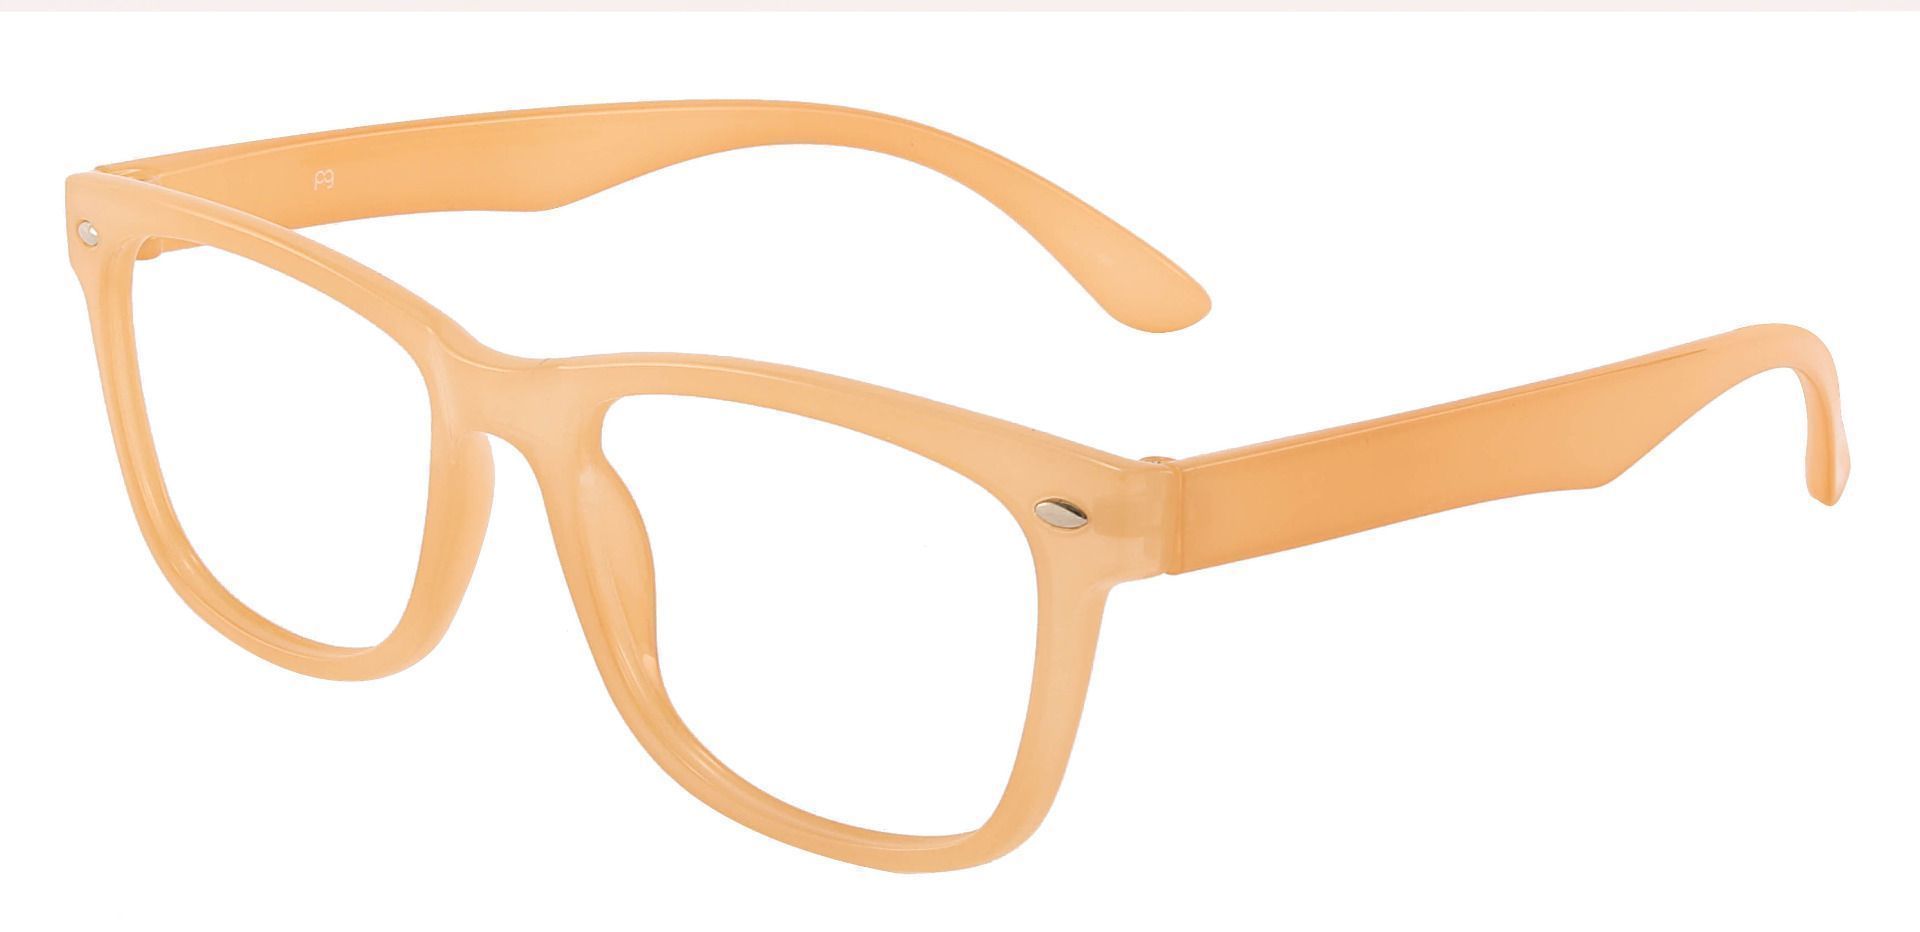 Oscar Rectangle Progressive Glasses - Brown